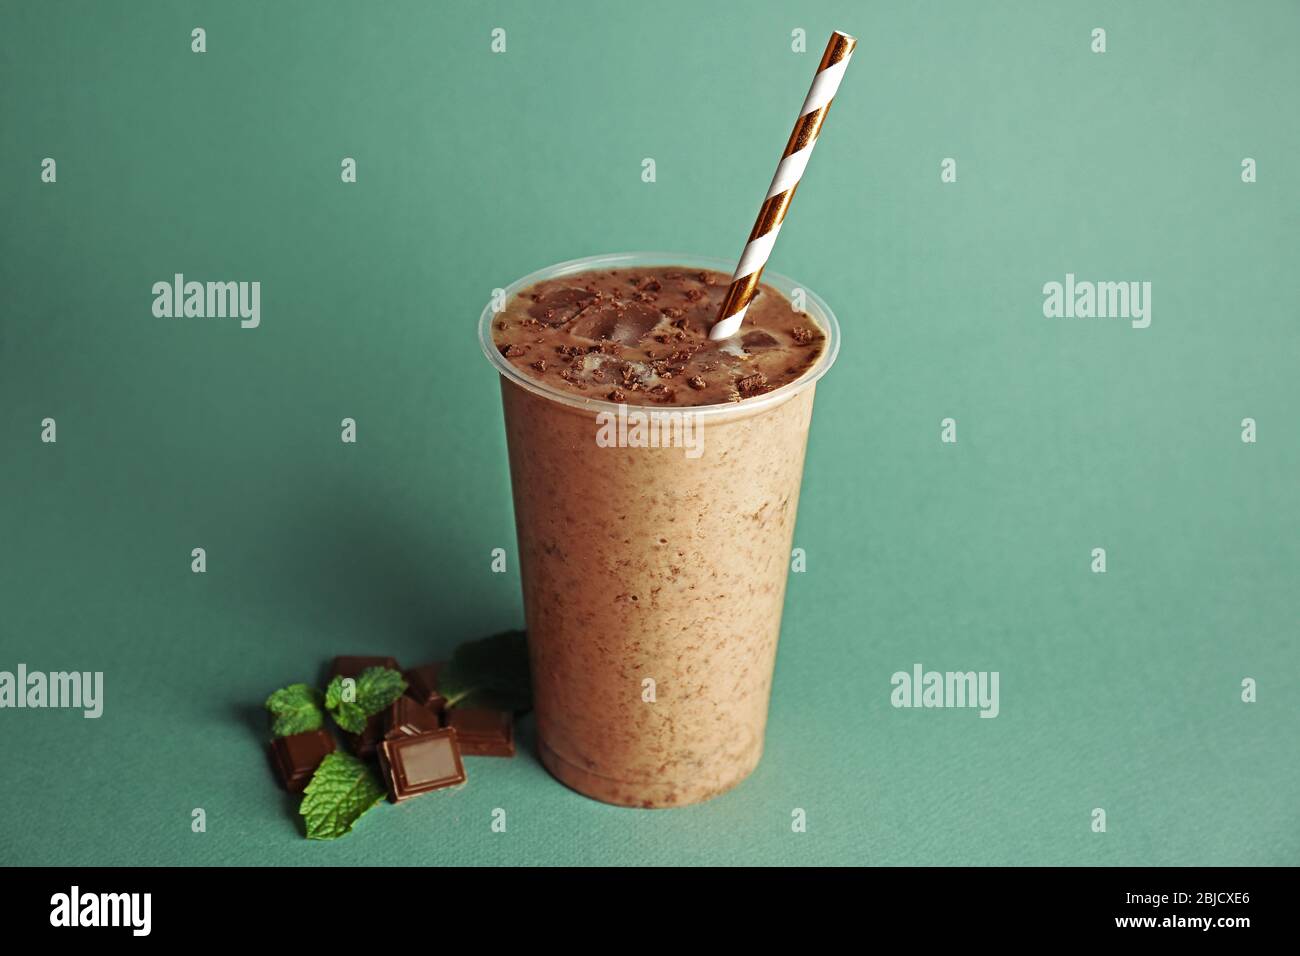 https://c8.alamy.com/comp/2BJCXE6/tasty-chocolate-milkshake-in-plastic-cup-on-green-background-2BJCXE6.jpg